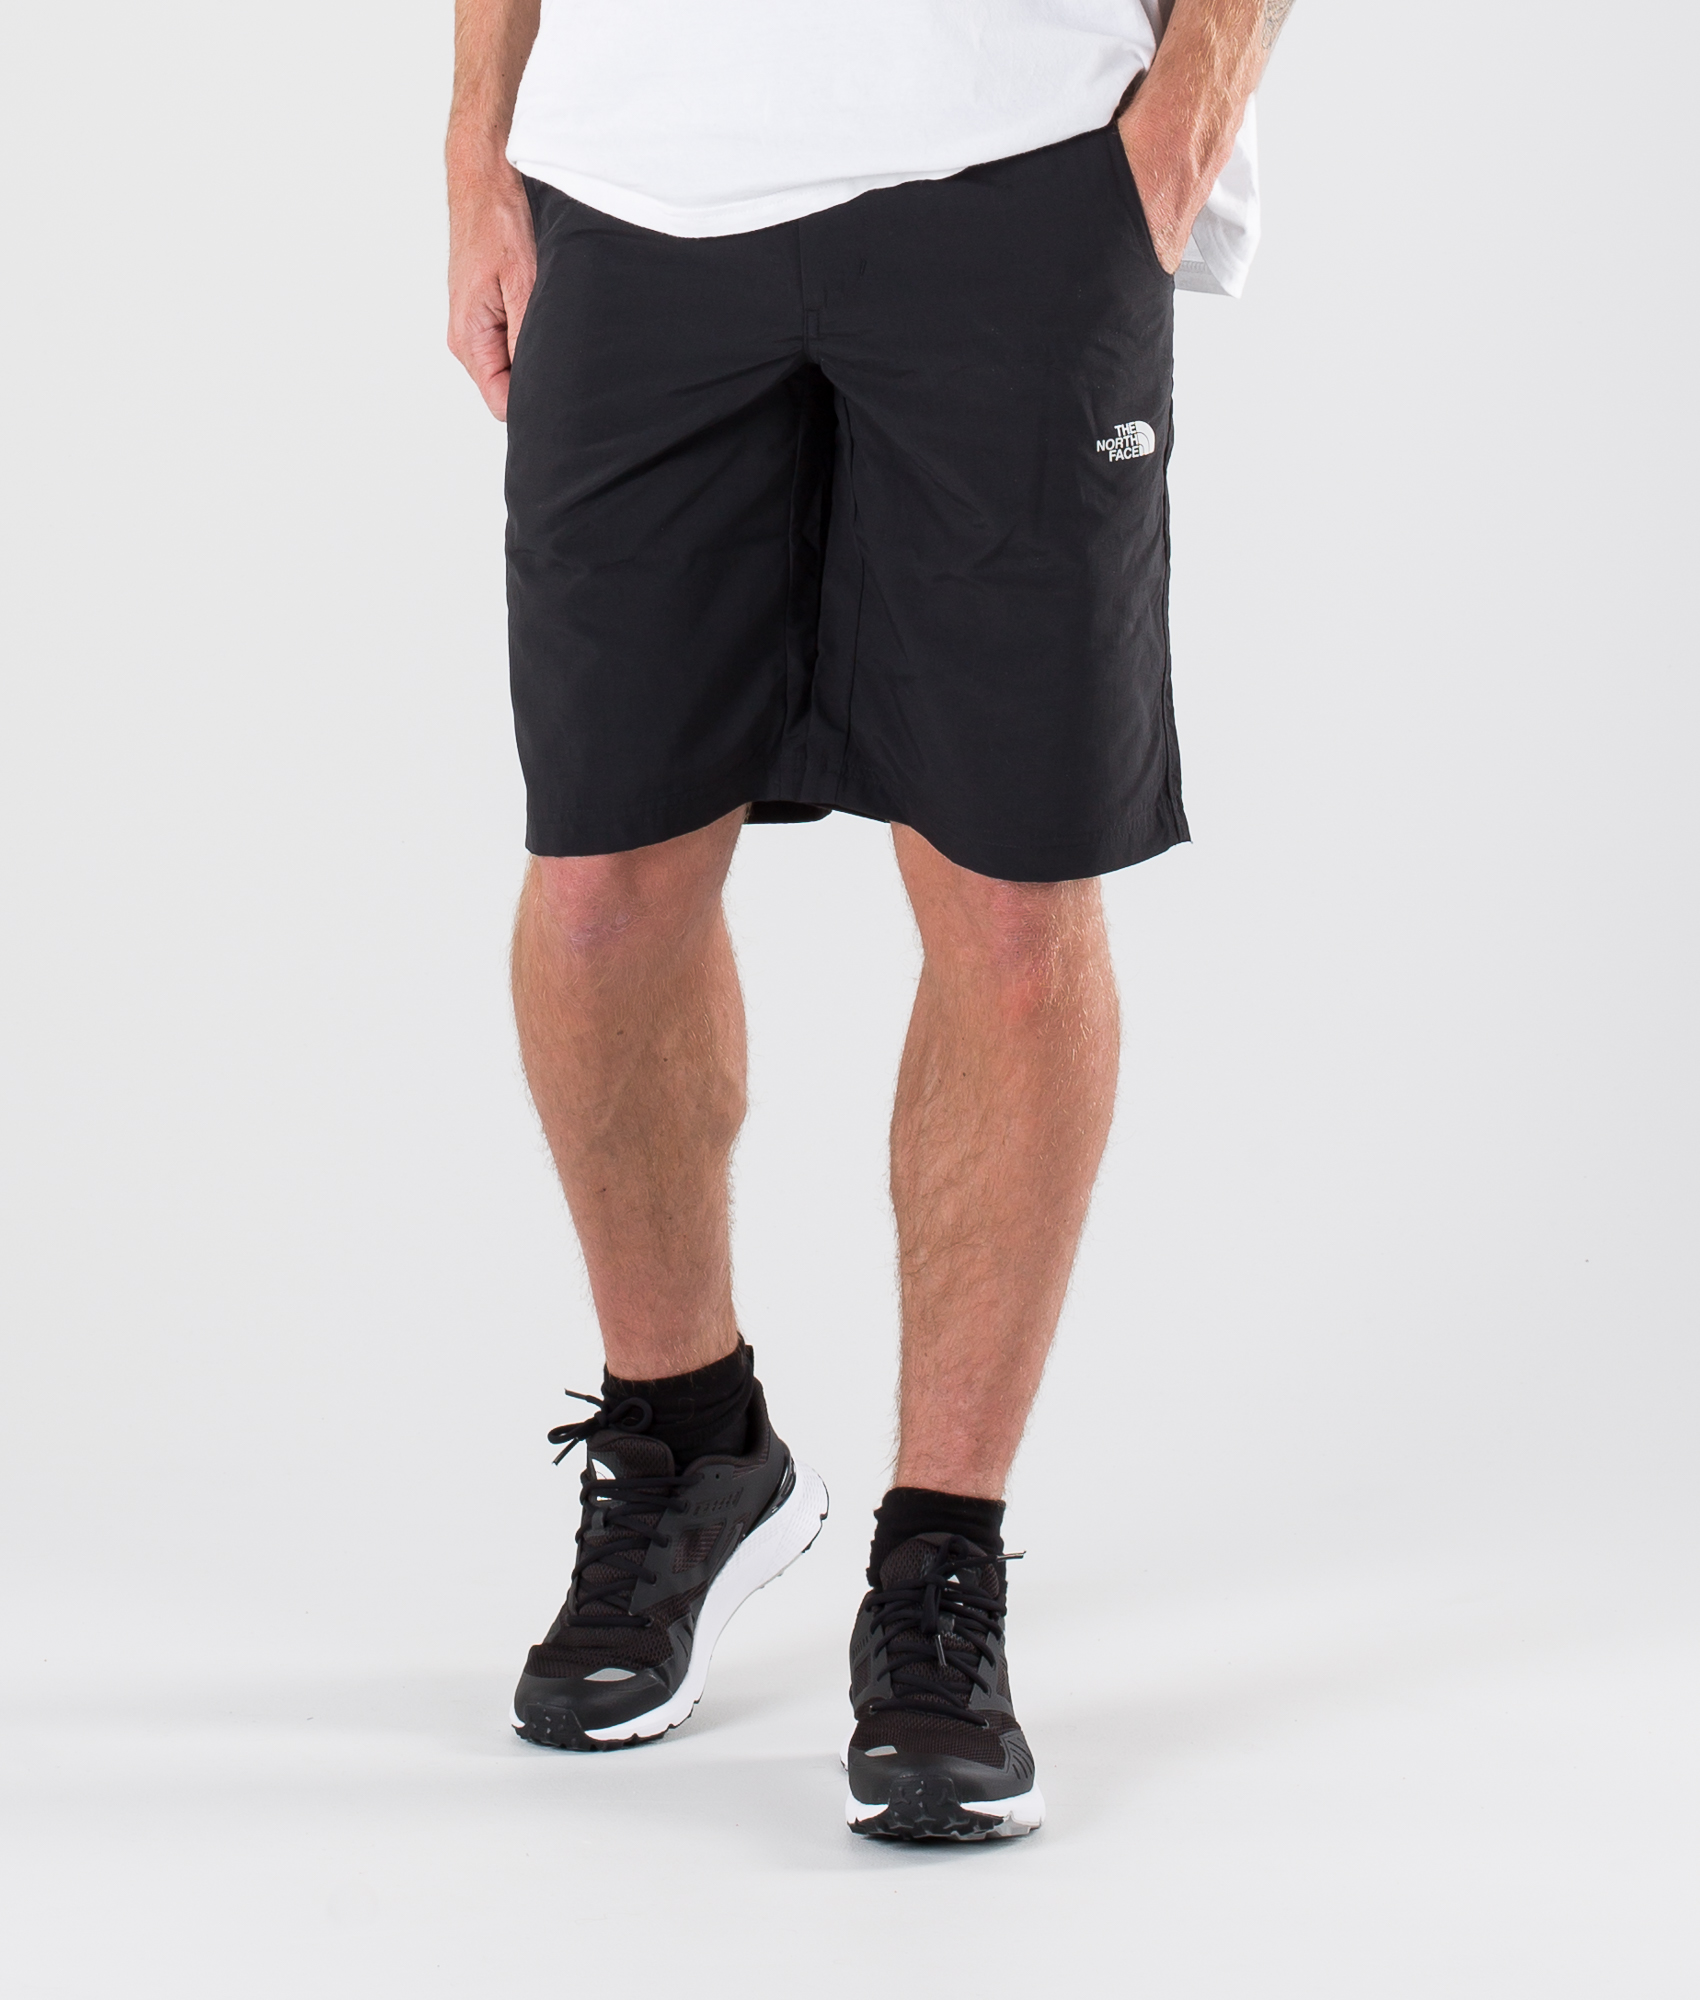 north face men's tanken shorts